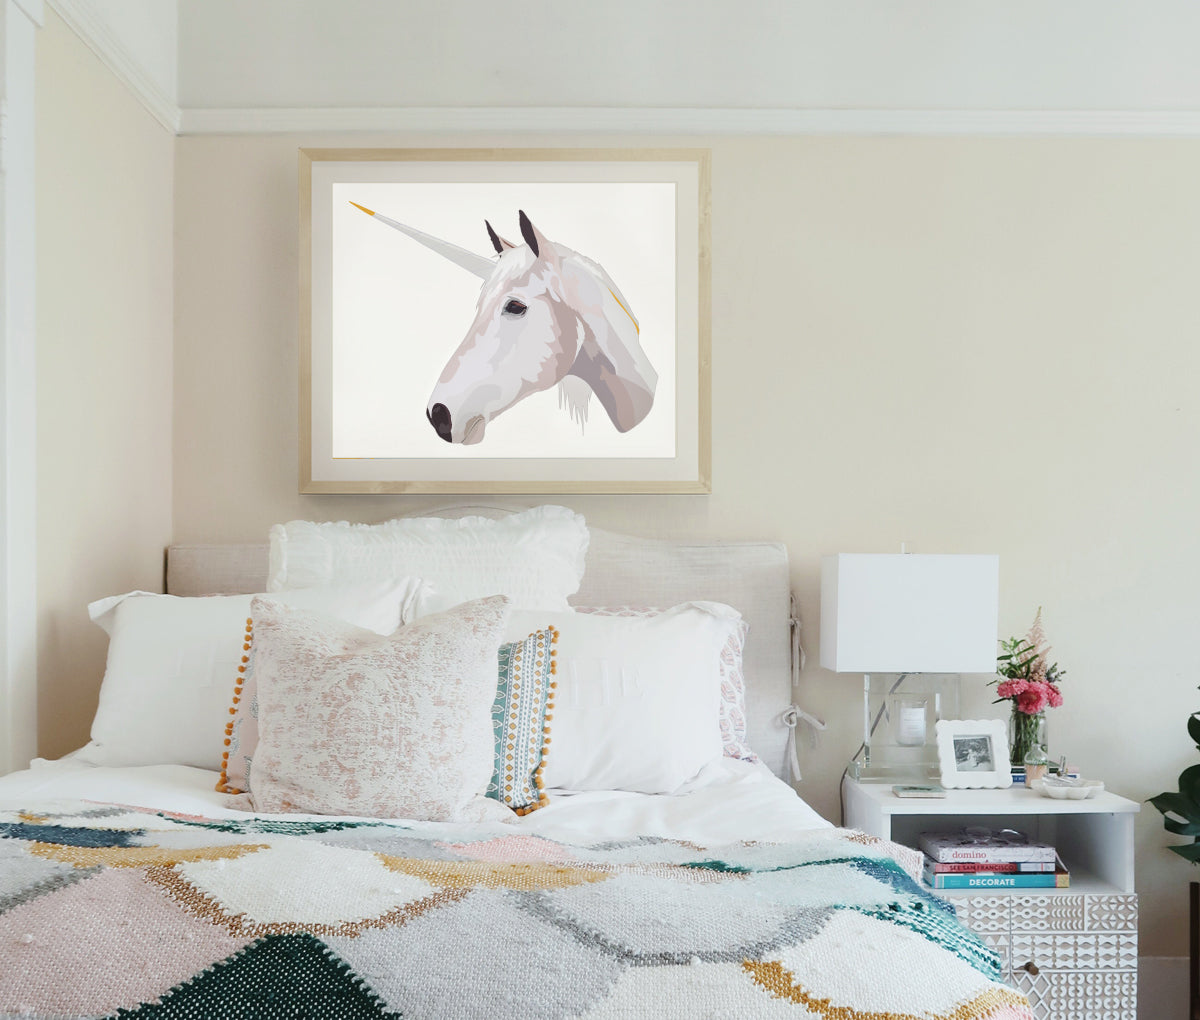 Unicorn wall print